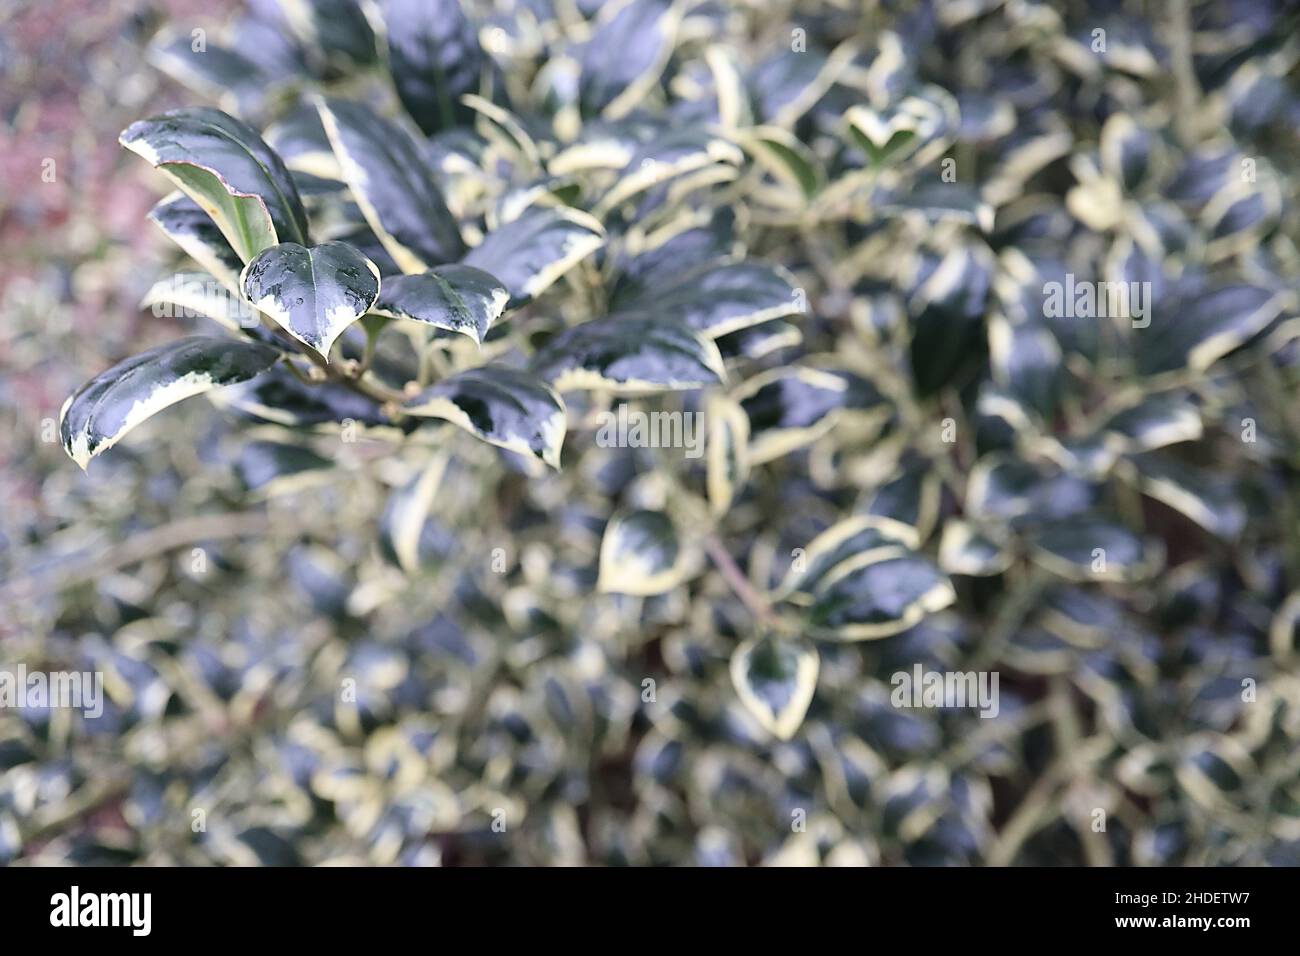 Ilex aquifolium ‘Silver Van Tol’ holly Silver Van Tol – downcurved dark green leaves with pale cream margins,  January, England, UK Stock Photo